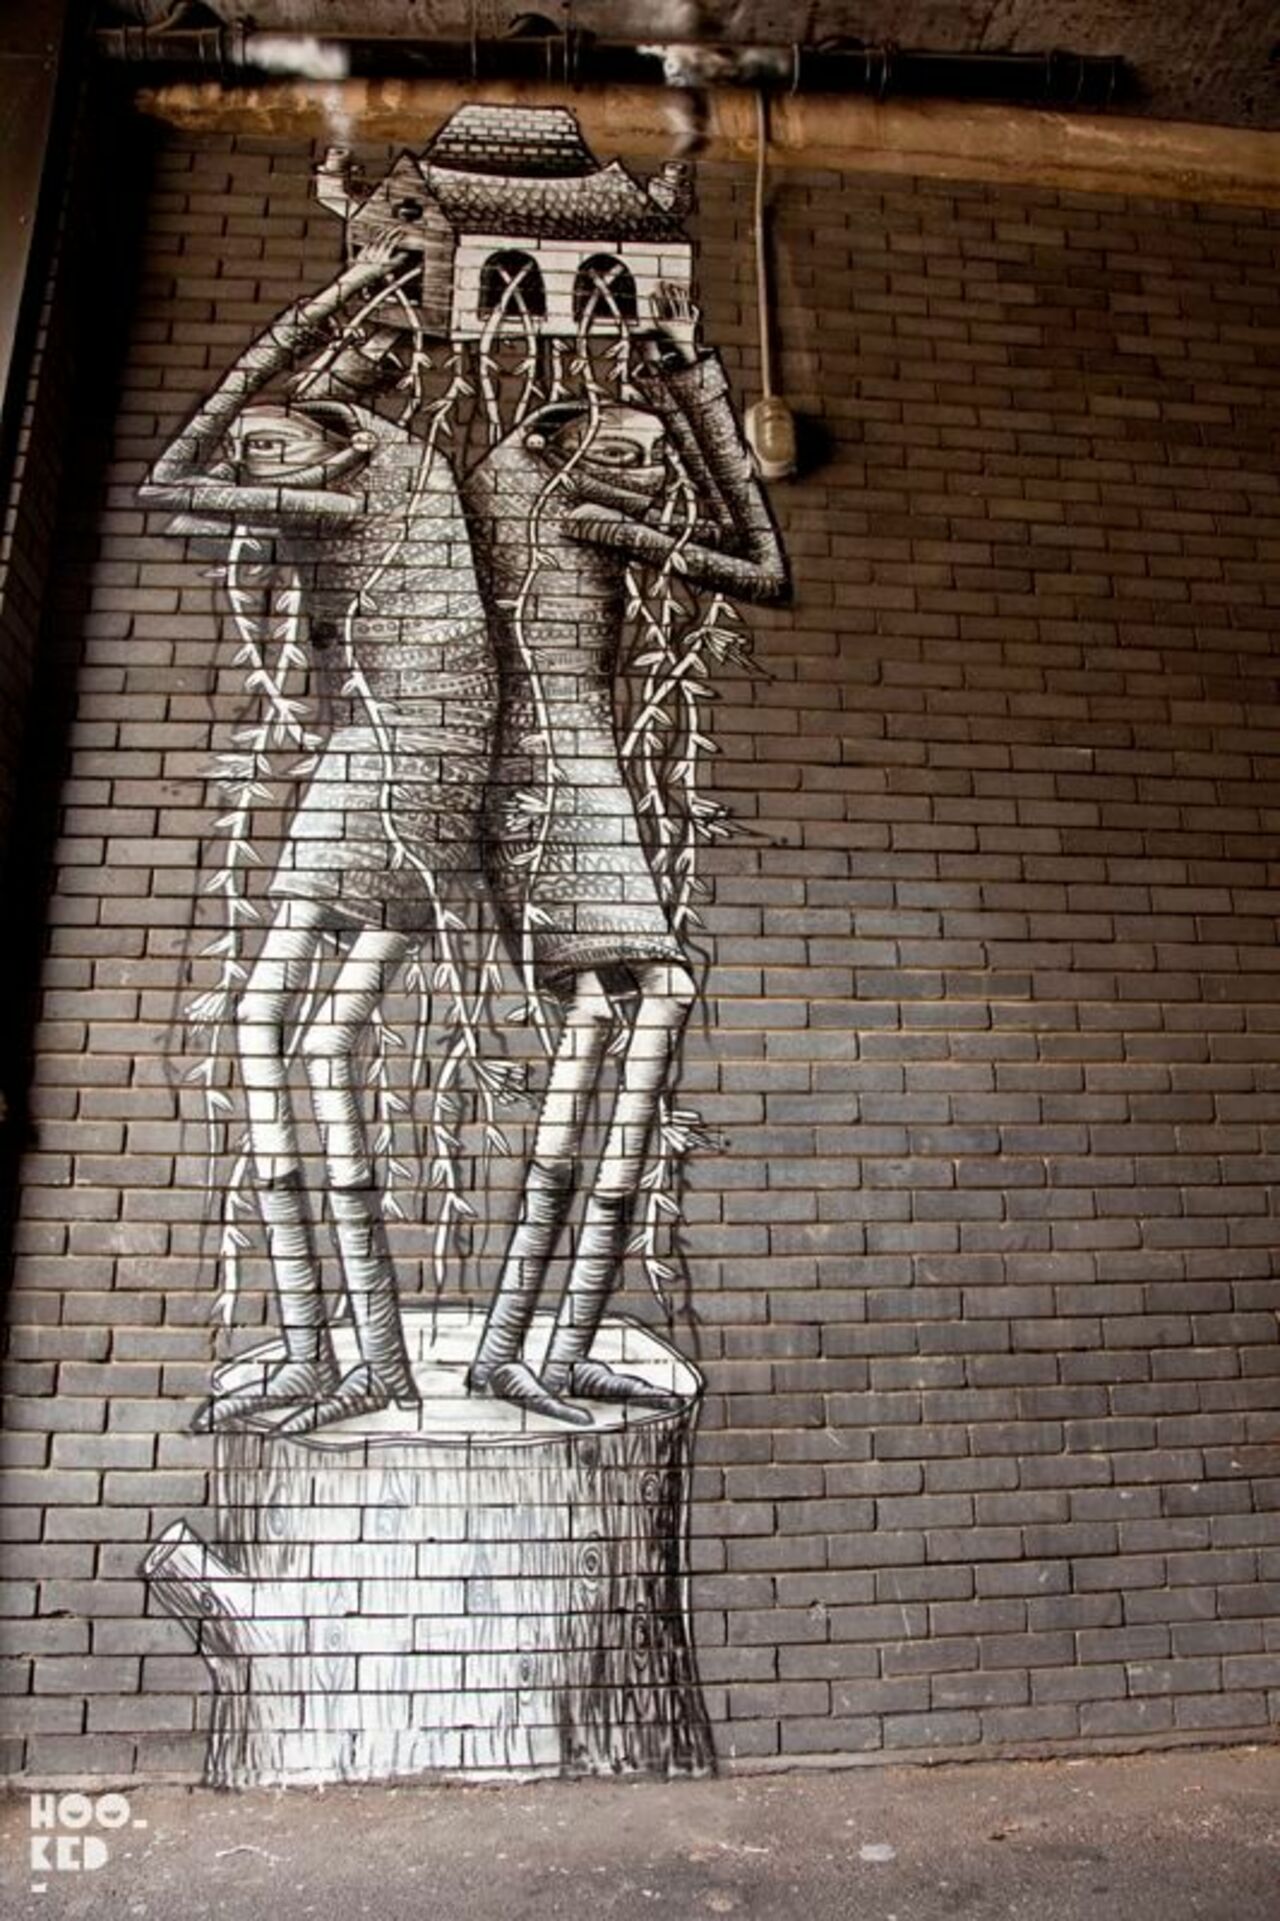 Phlegm in London#streetart #mural #graffiti #art https://t.co/zcAgYAYw59